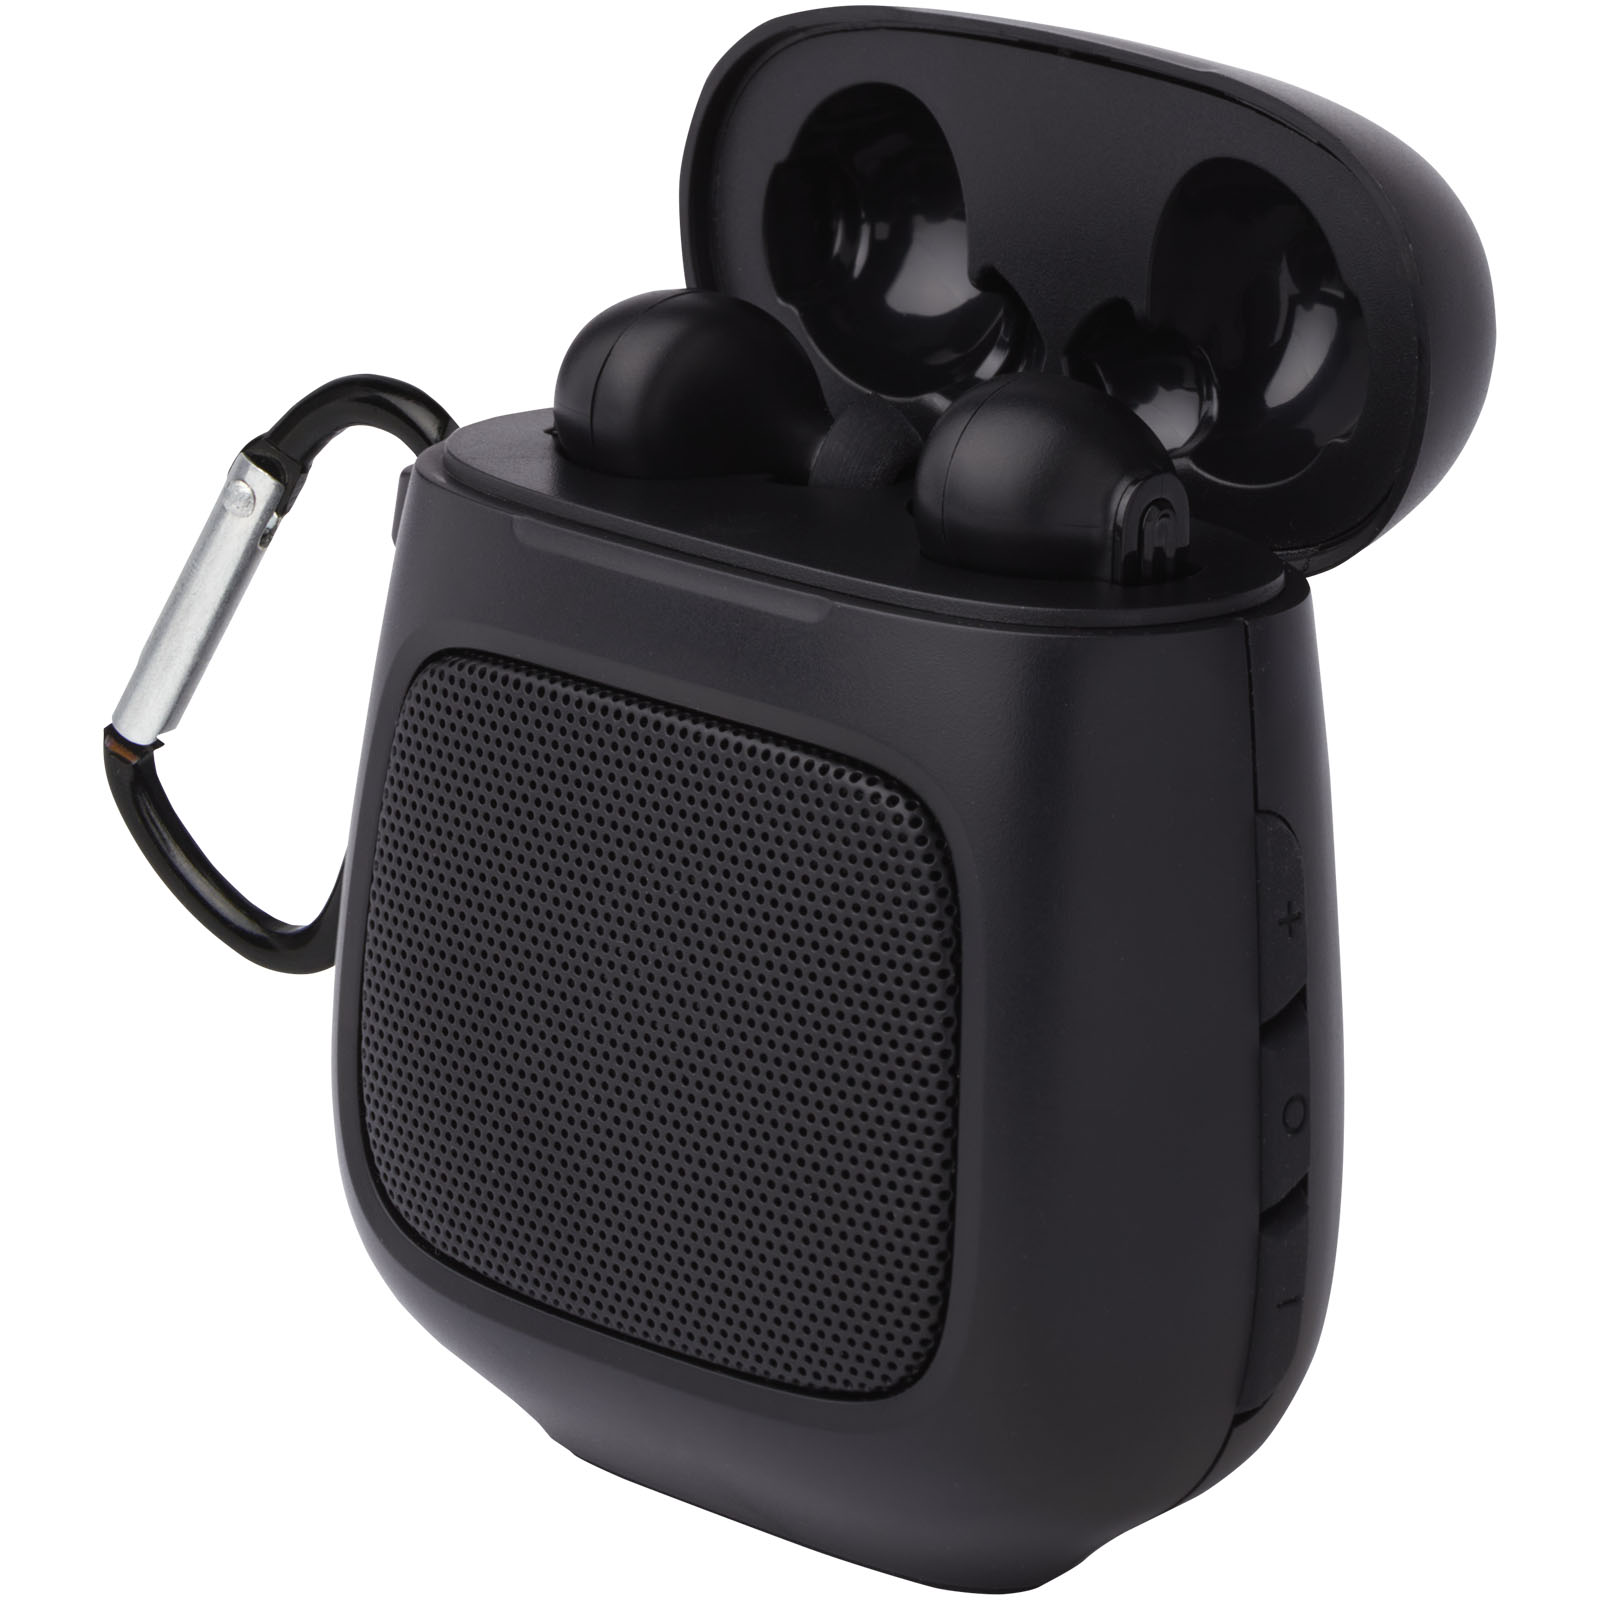 Advertising Speakers - Remix auto pair True Wireless earbuds and speaker - 4